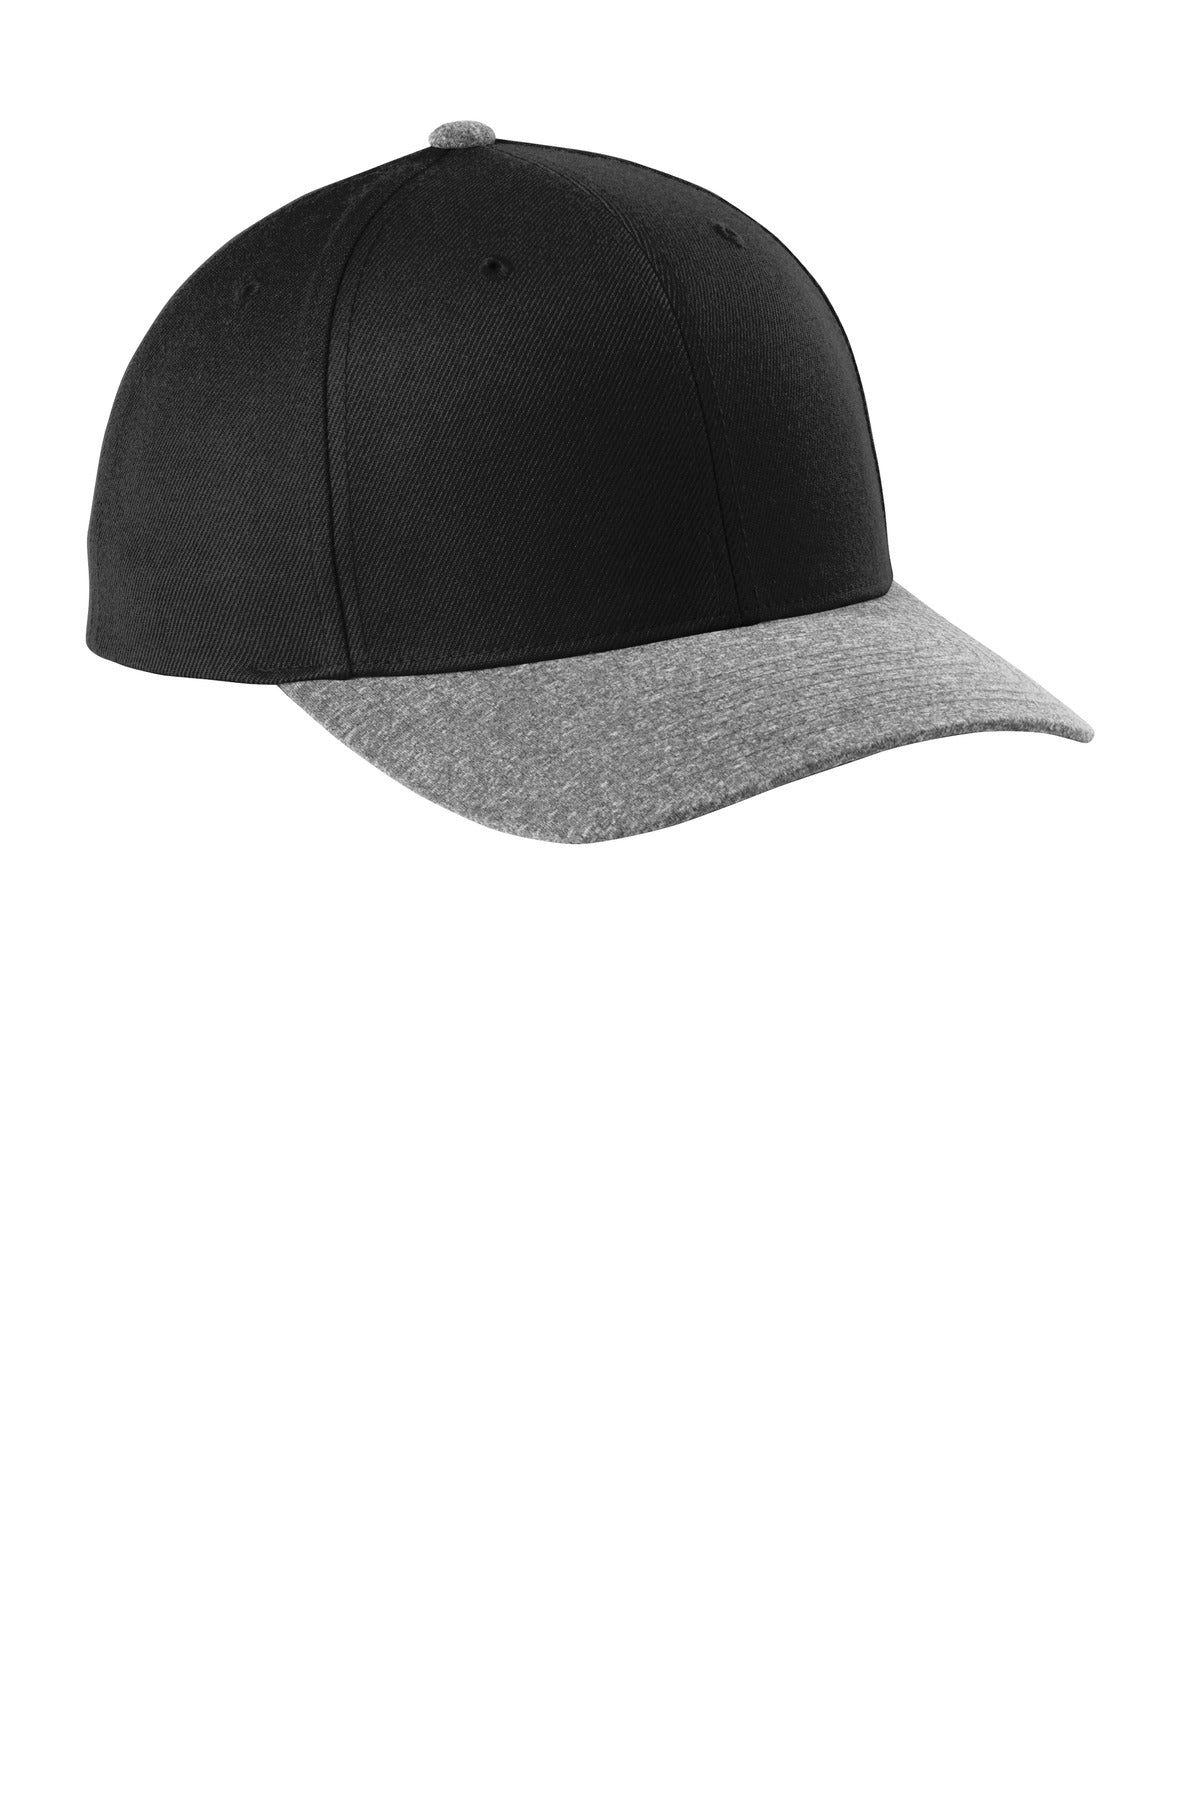 Caps Black/ Grey Heather OSFA Sport-Tek